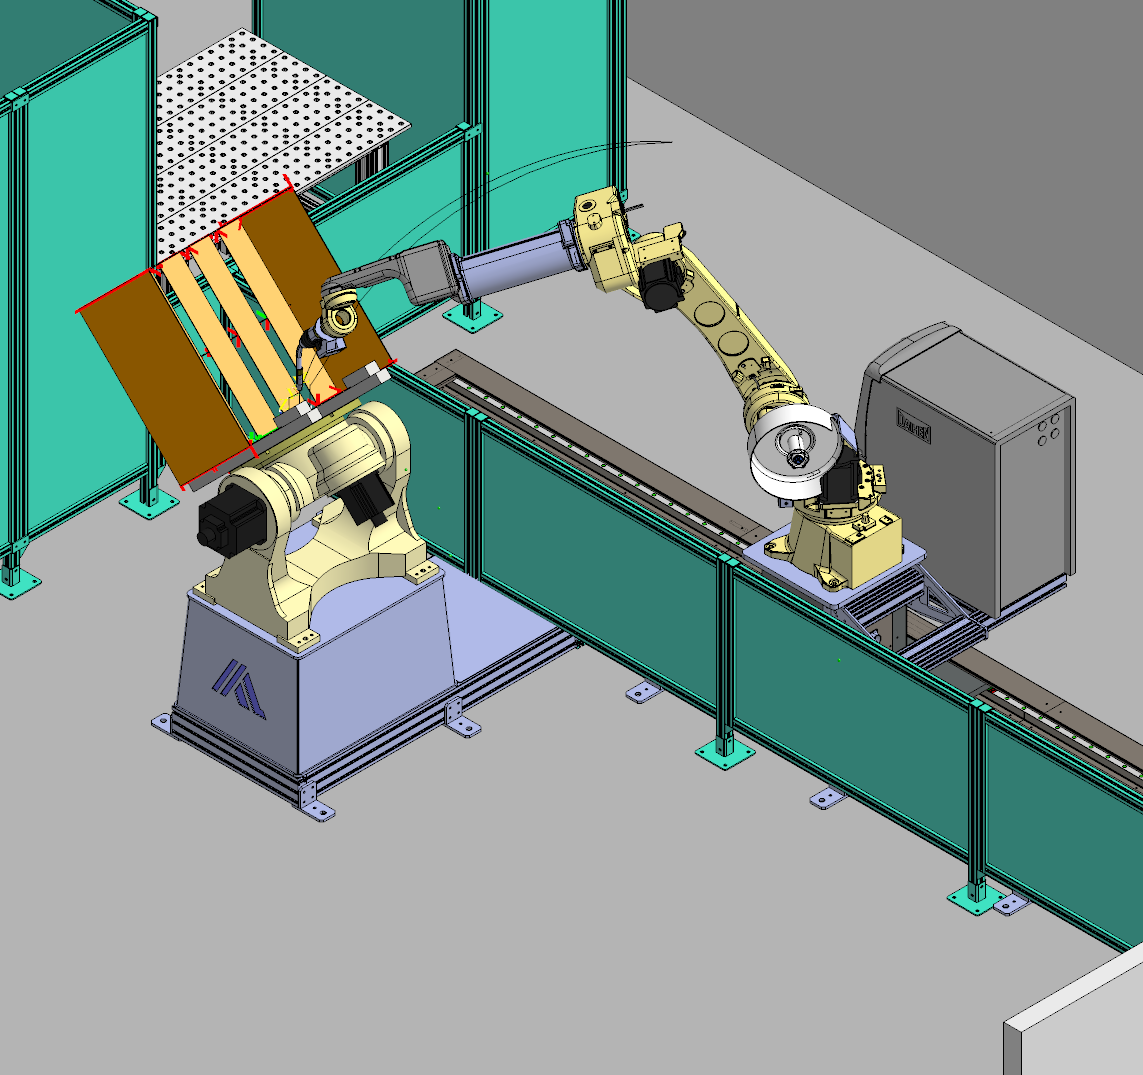 Verbotics Weld being used to program an OTC Daihen robot